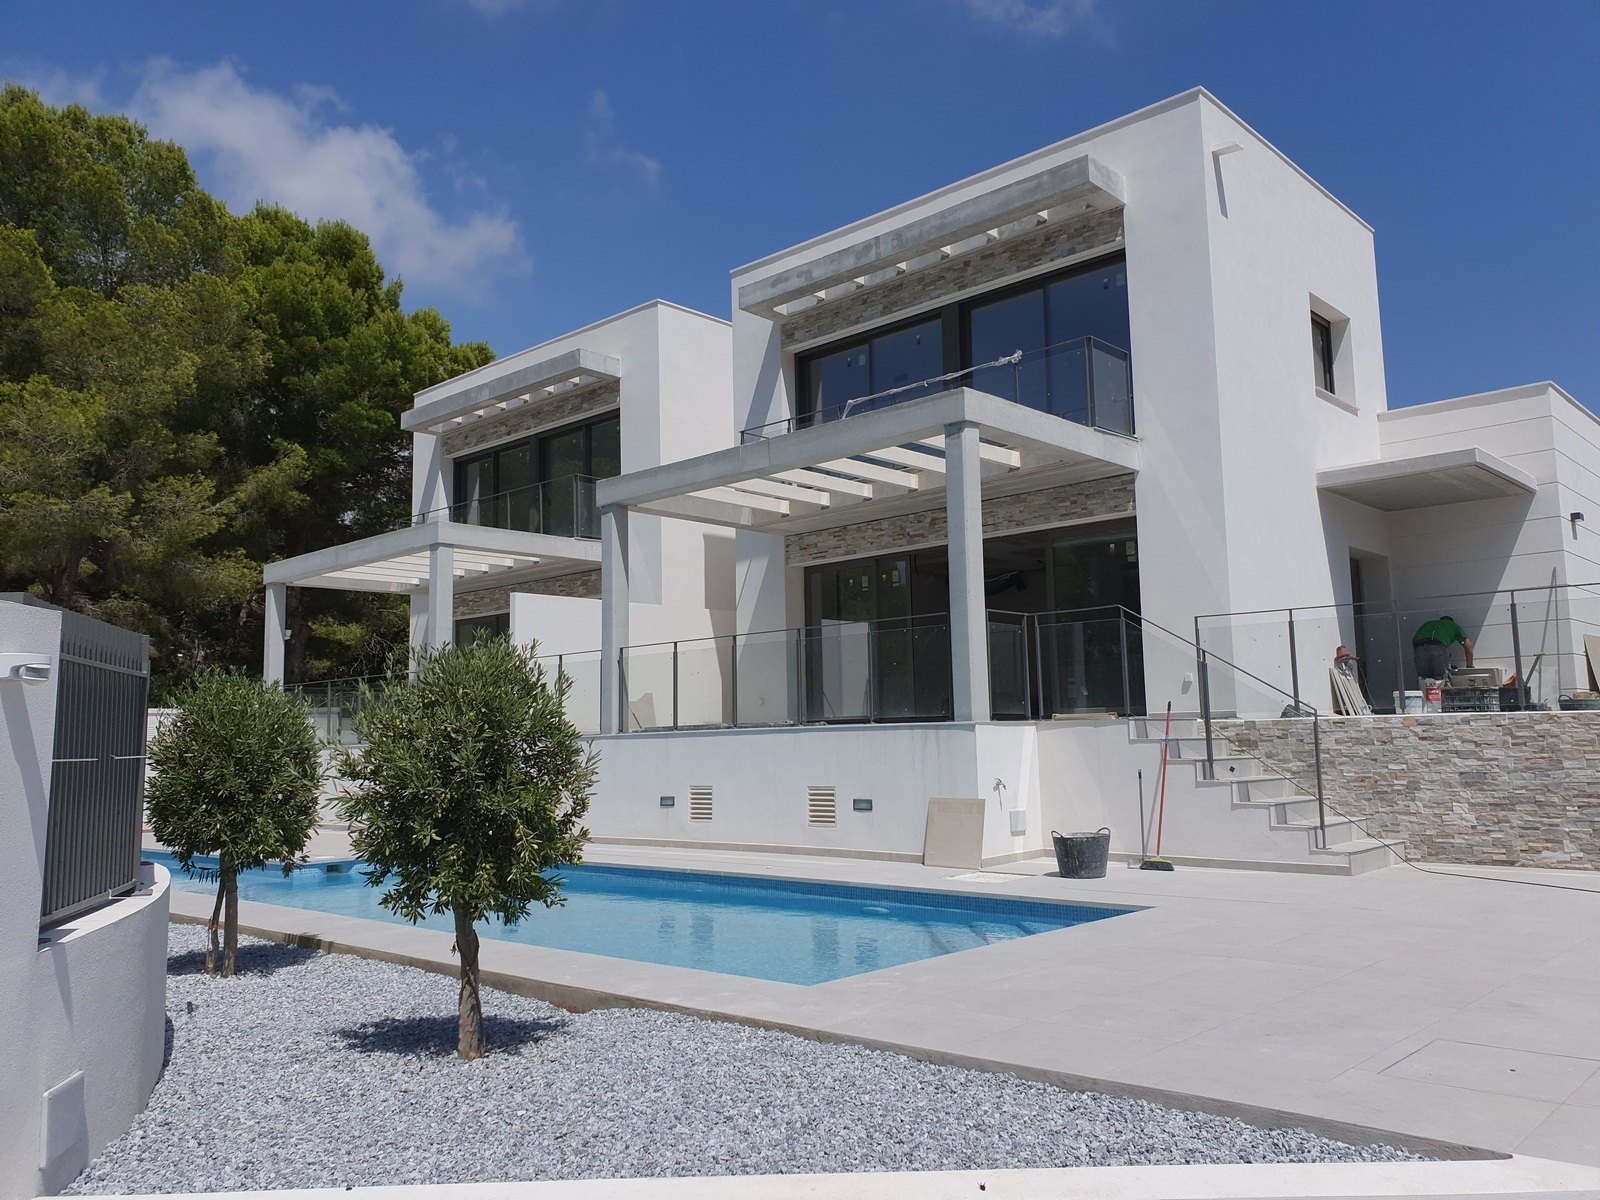 New built semidetached villa with swimming pool in Moraira.